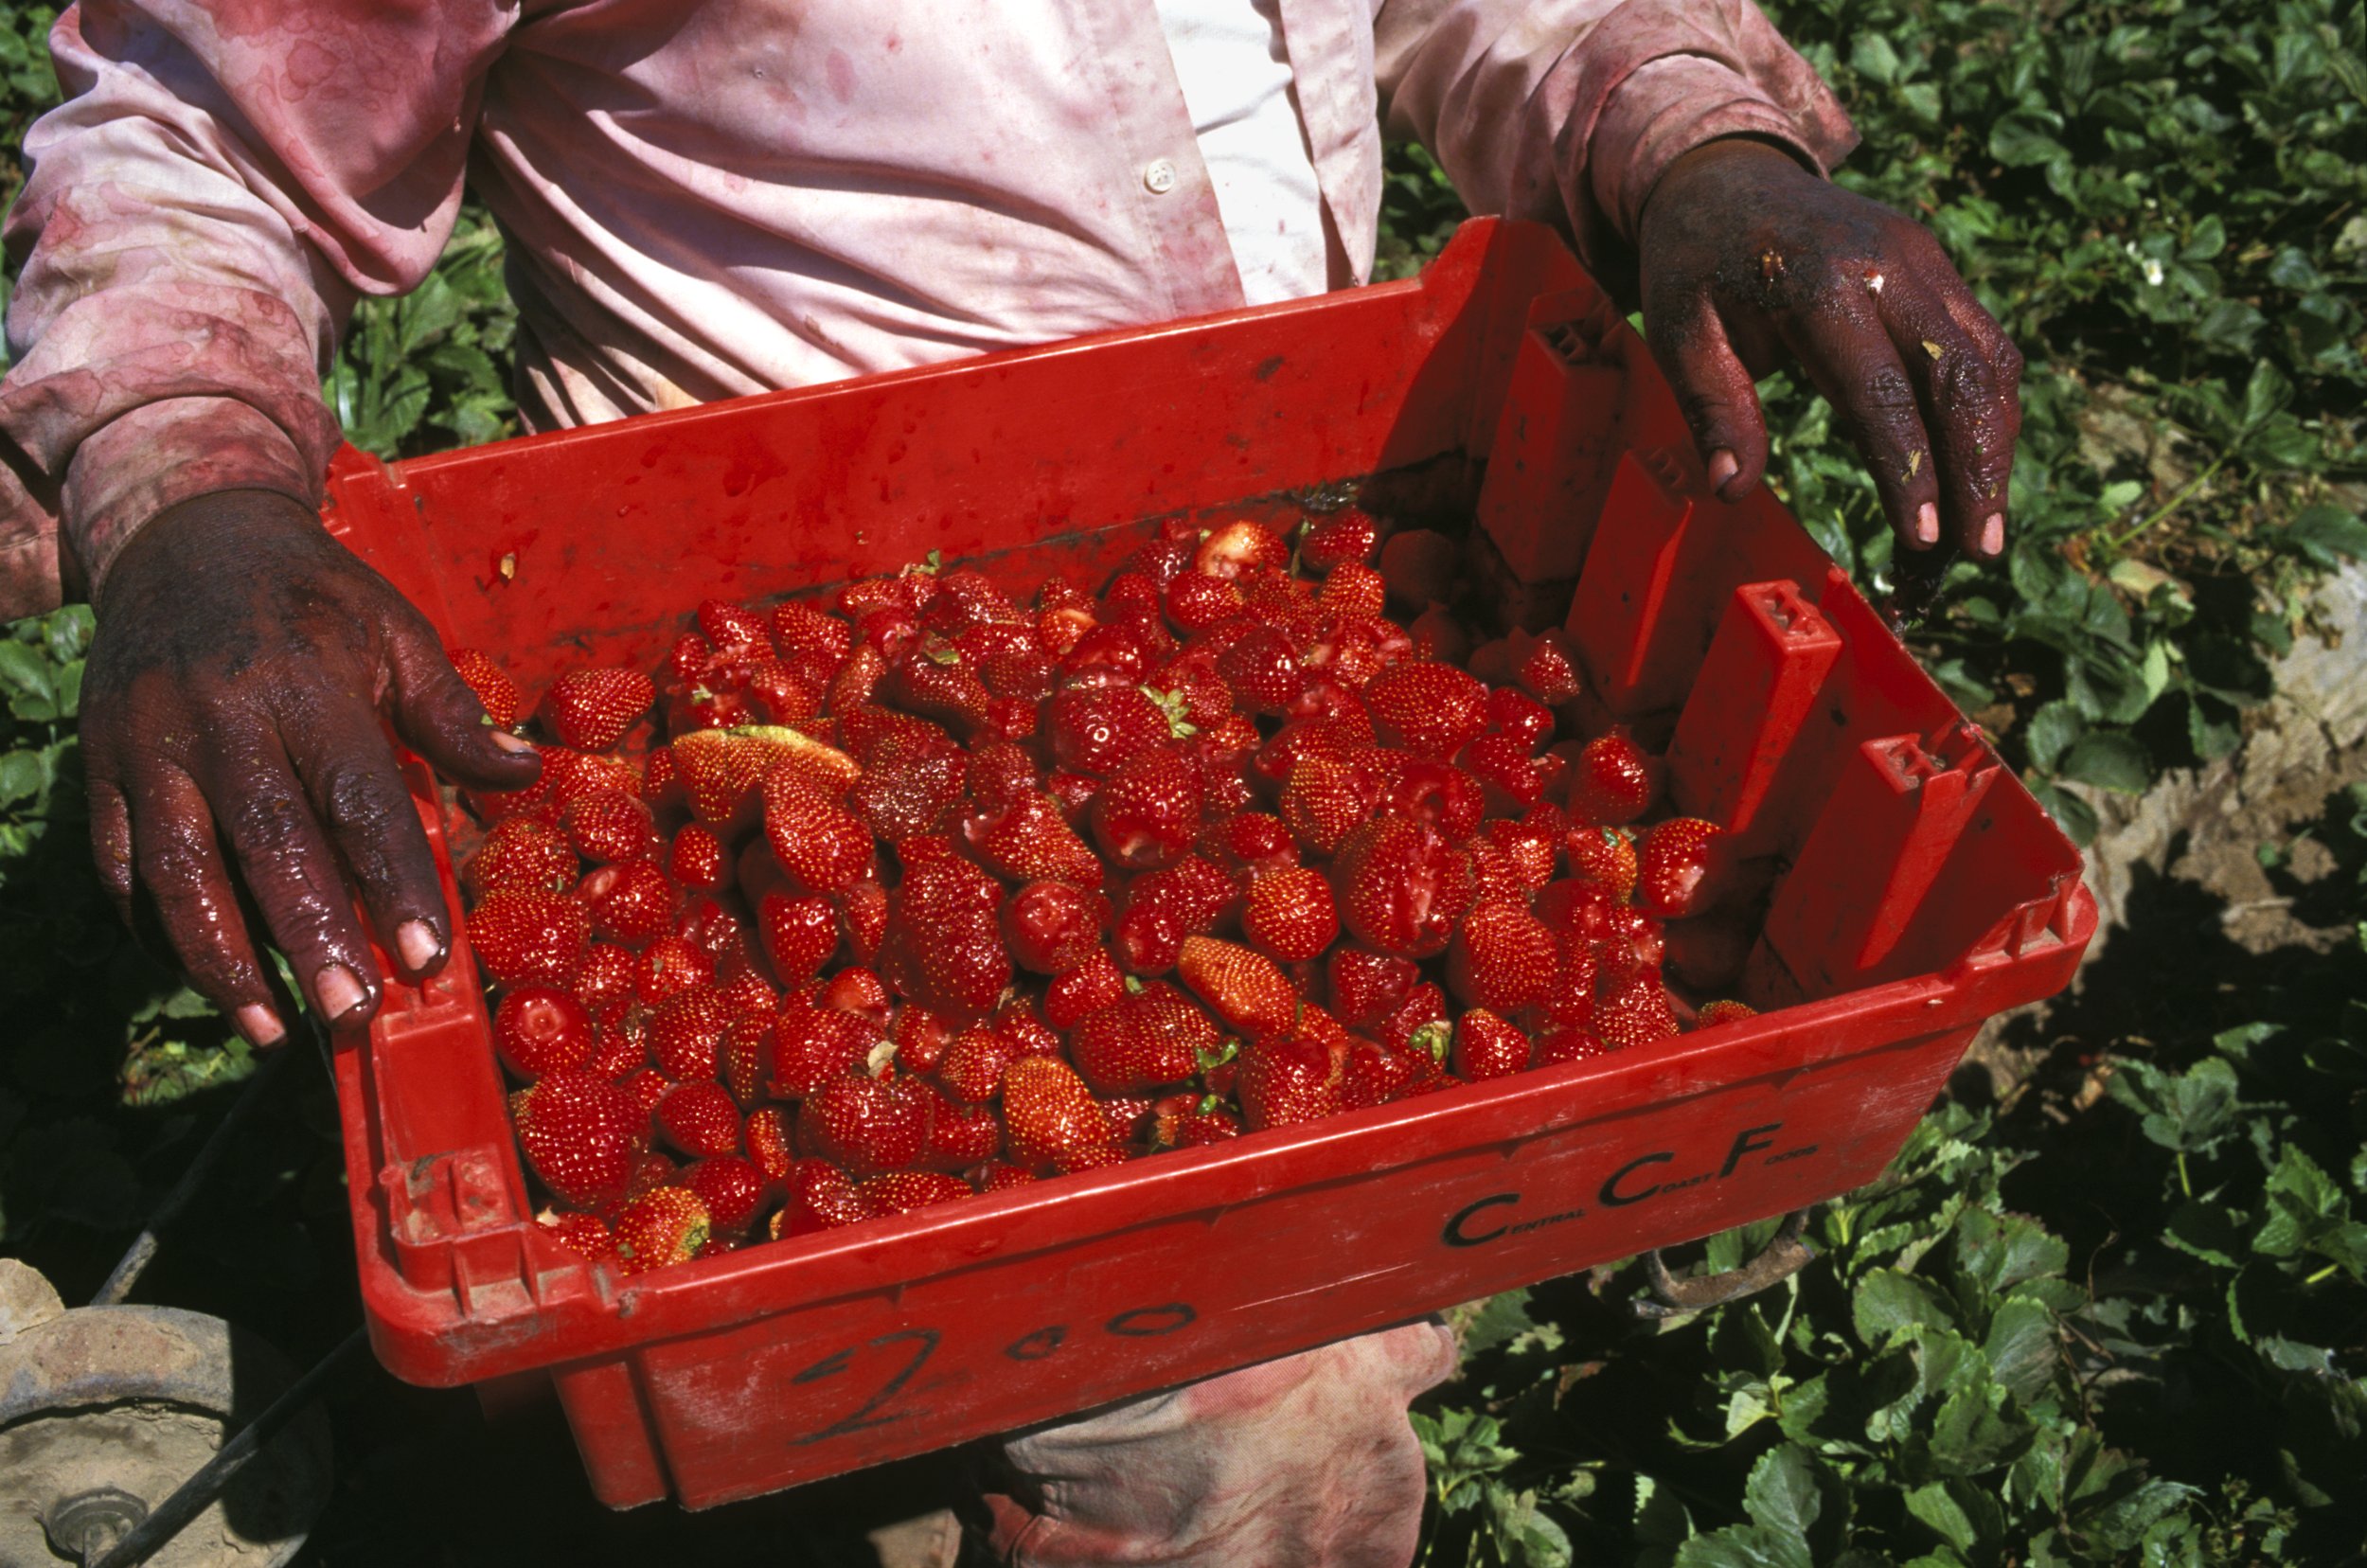  Migrant farm worker harvesting strawberries near San Diego. 1995 